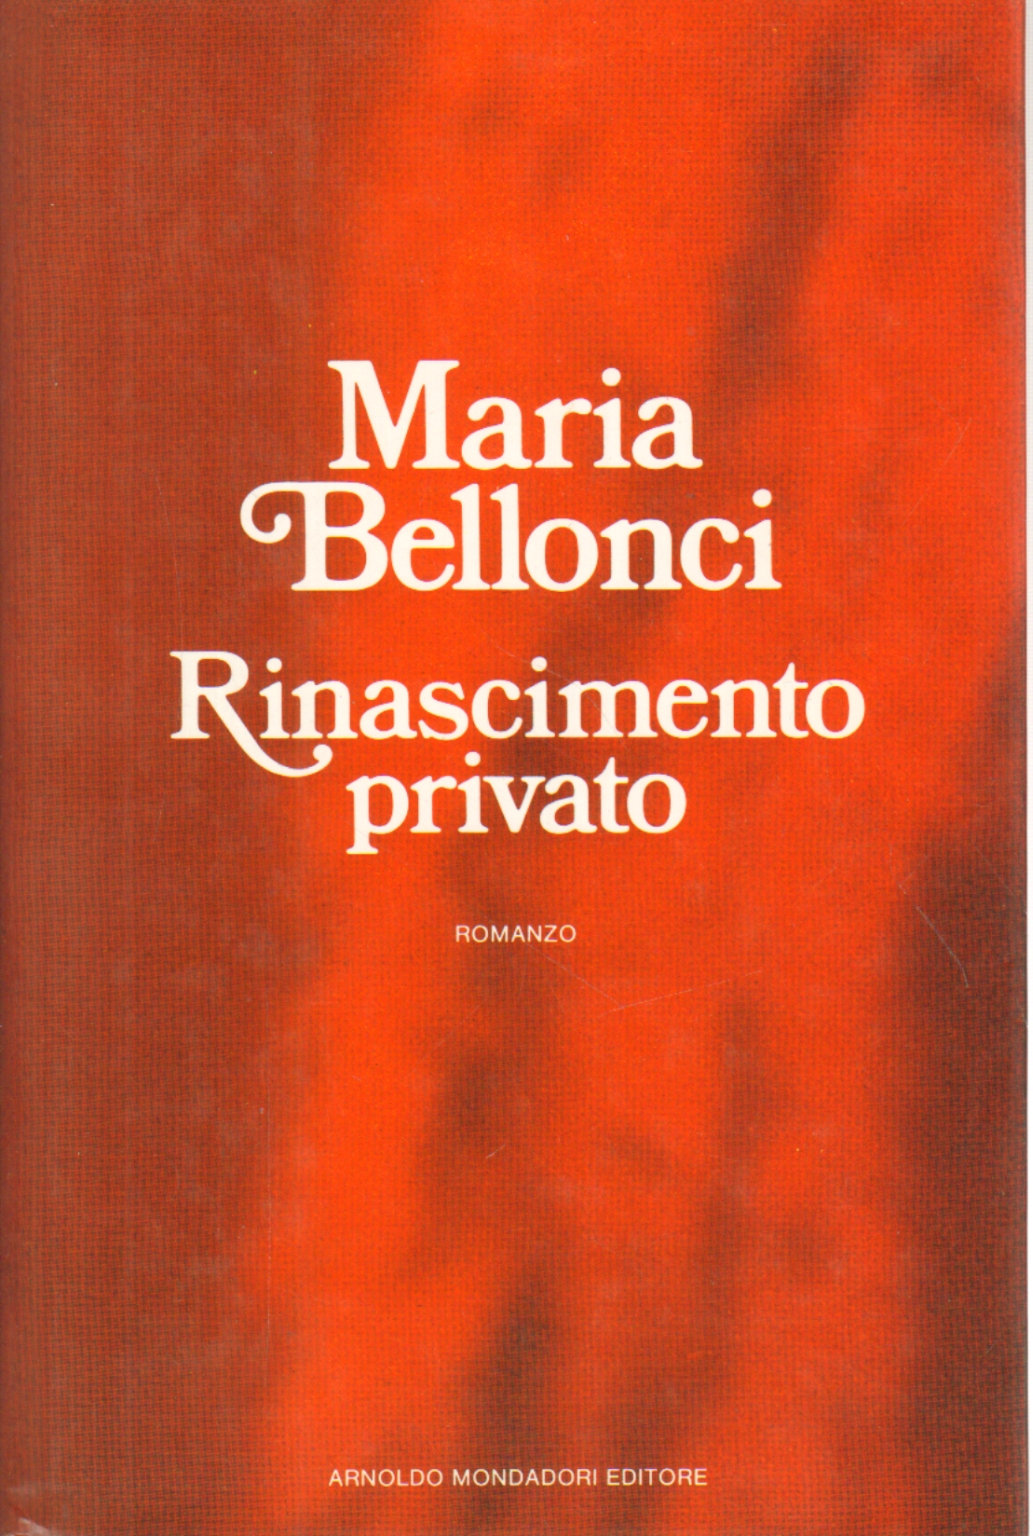 Private Renaissance, Maria Bellonci